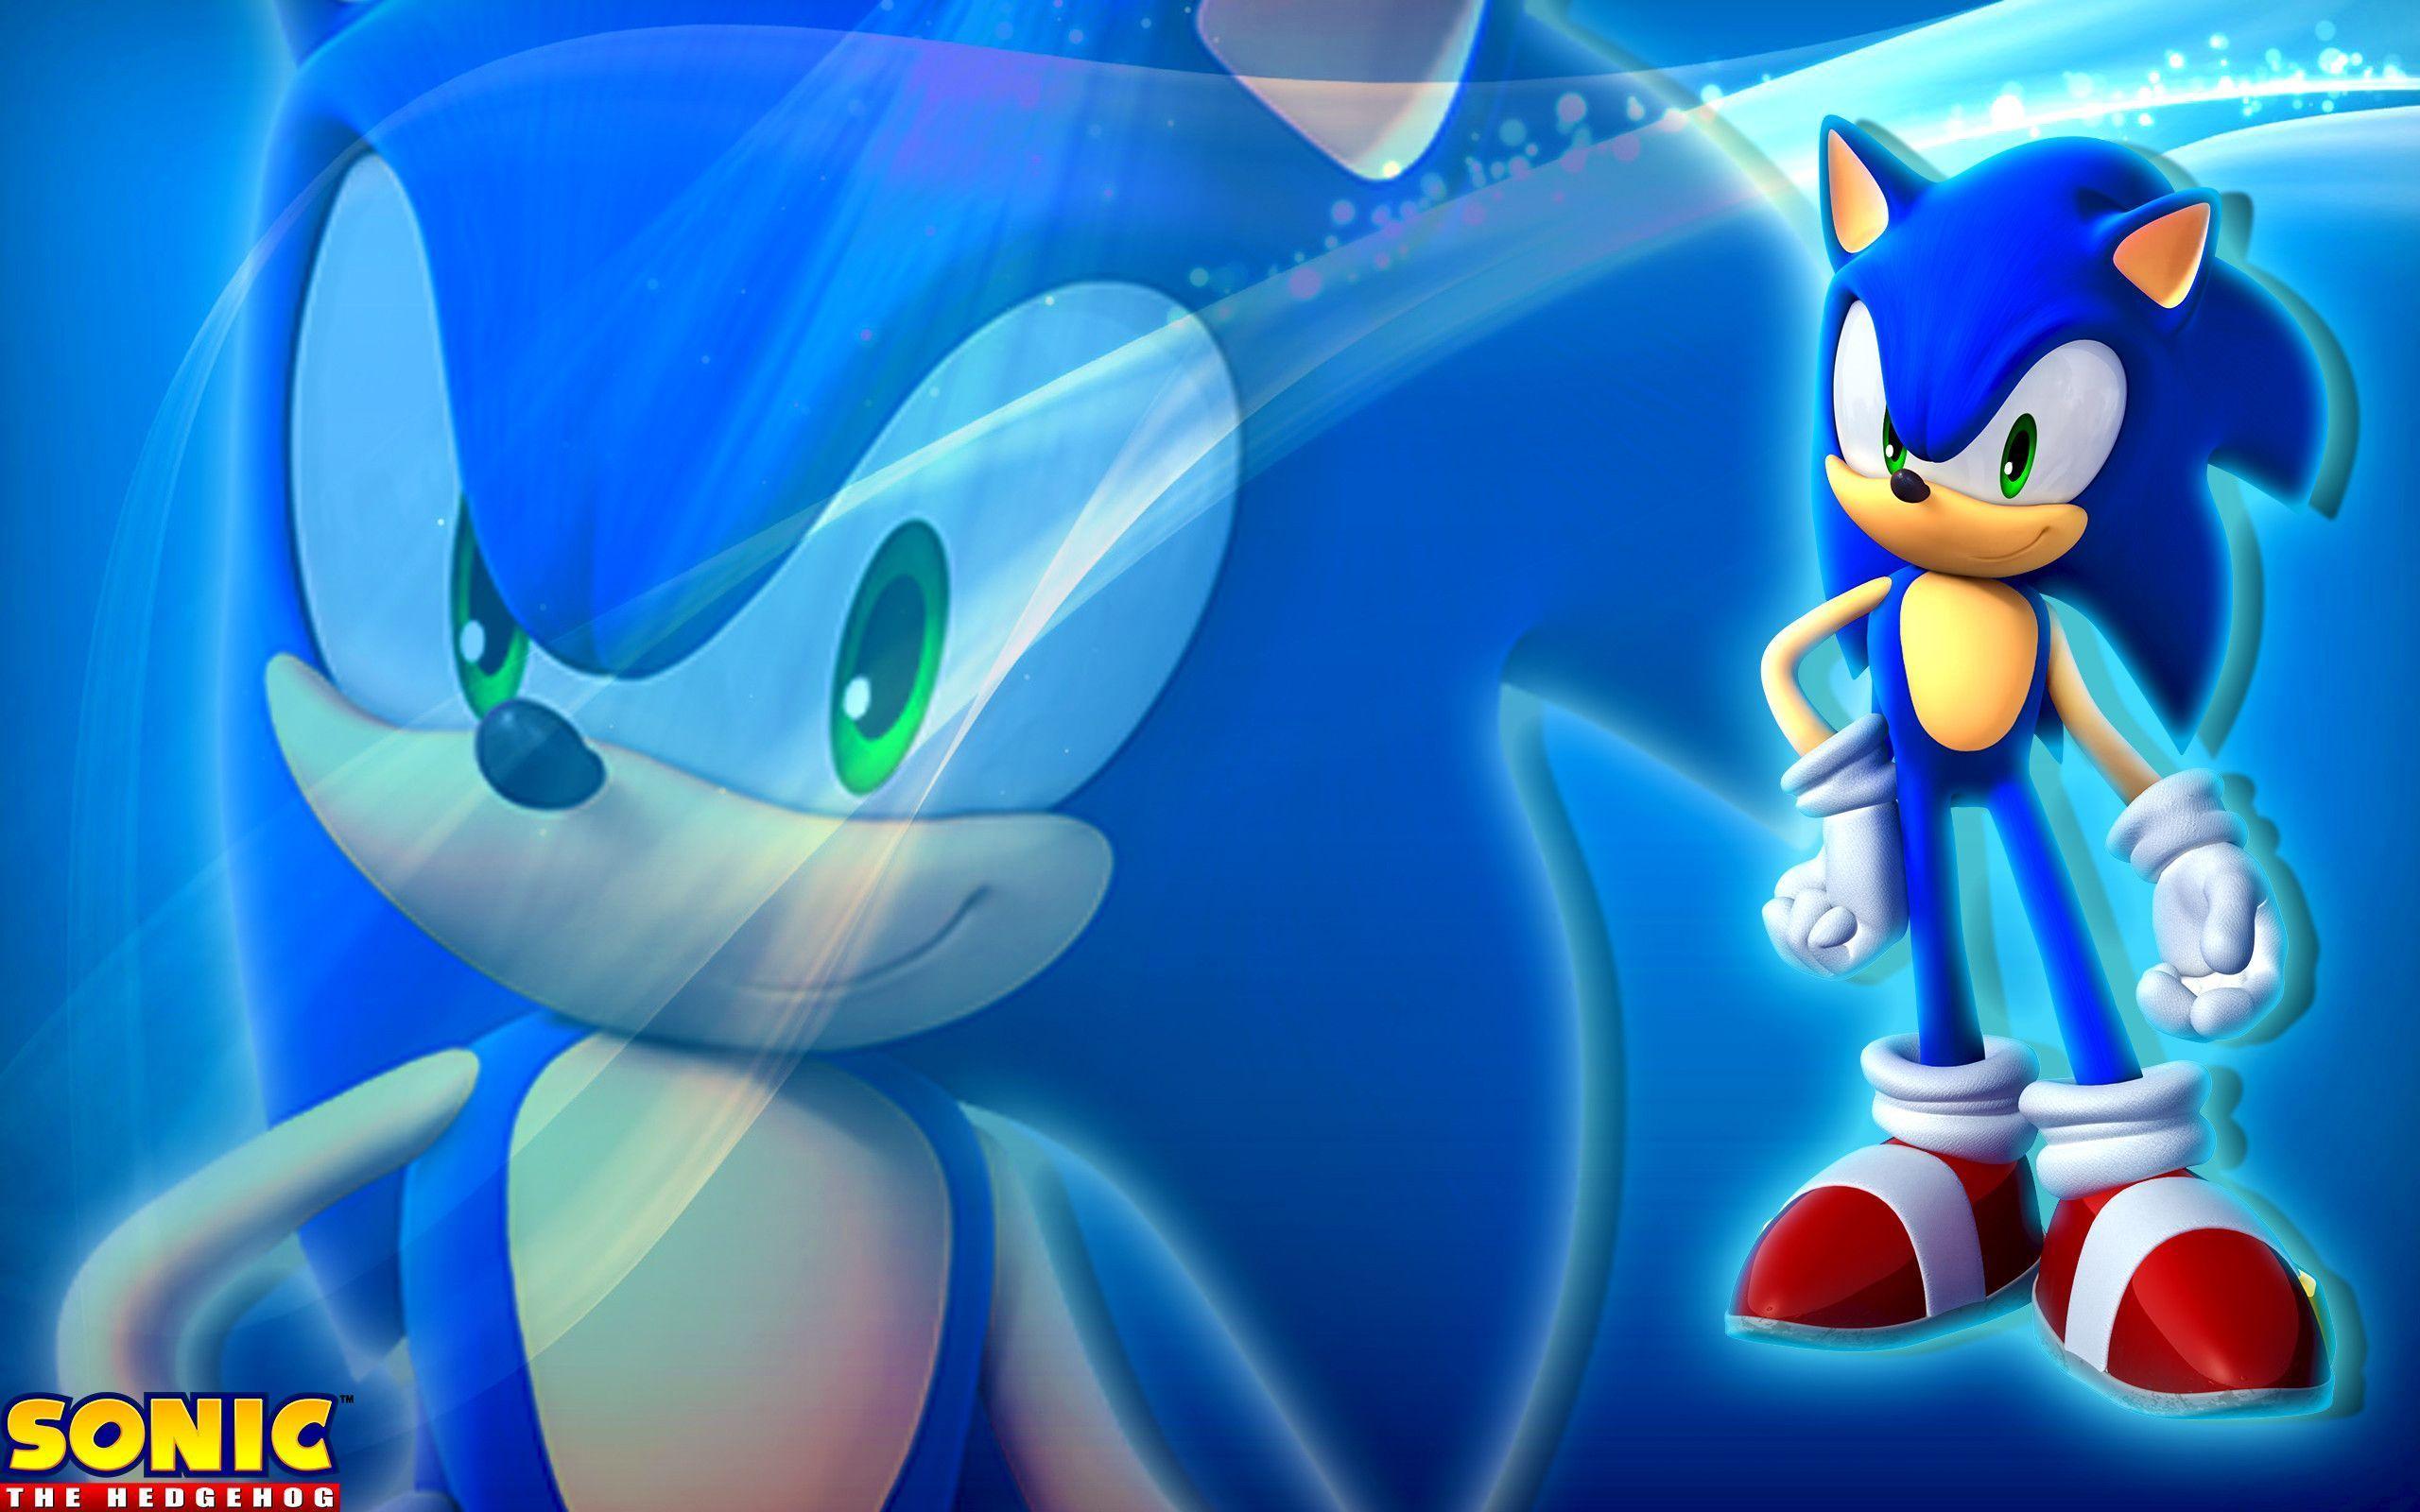 Sonic The Hedgehog Wallpaper. HD Background Wallpaper. Sonic